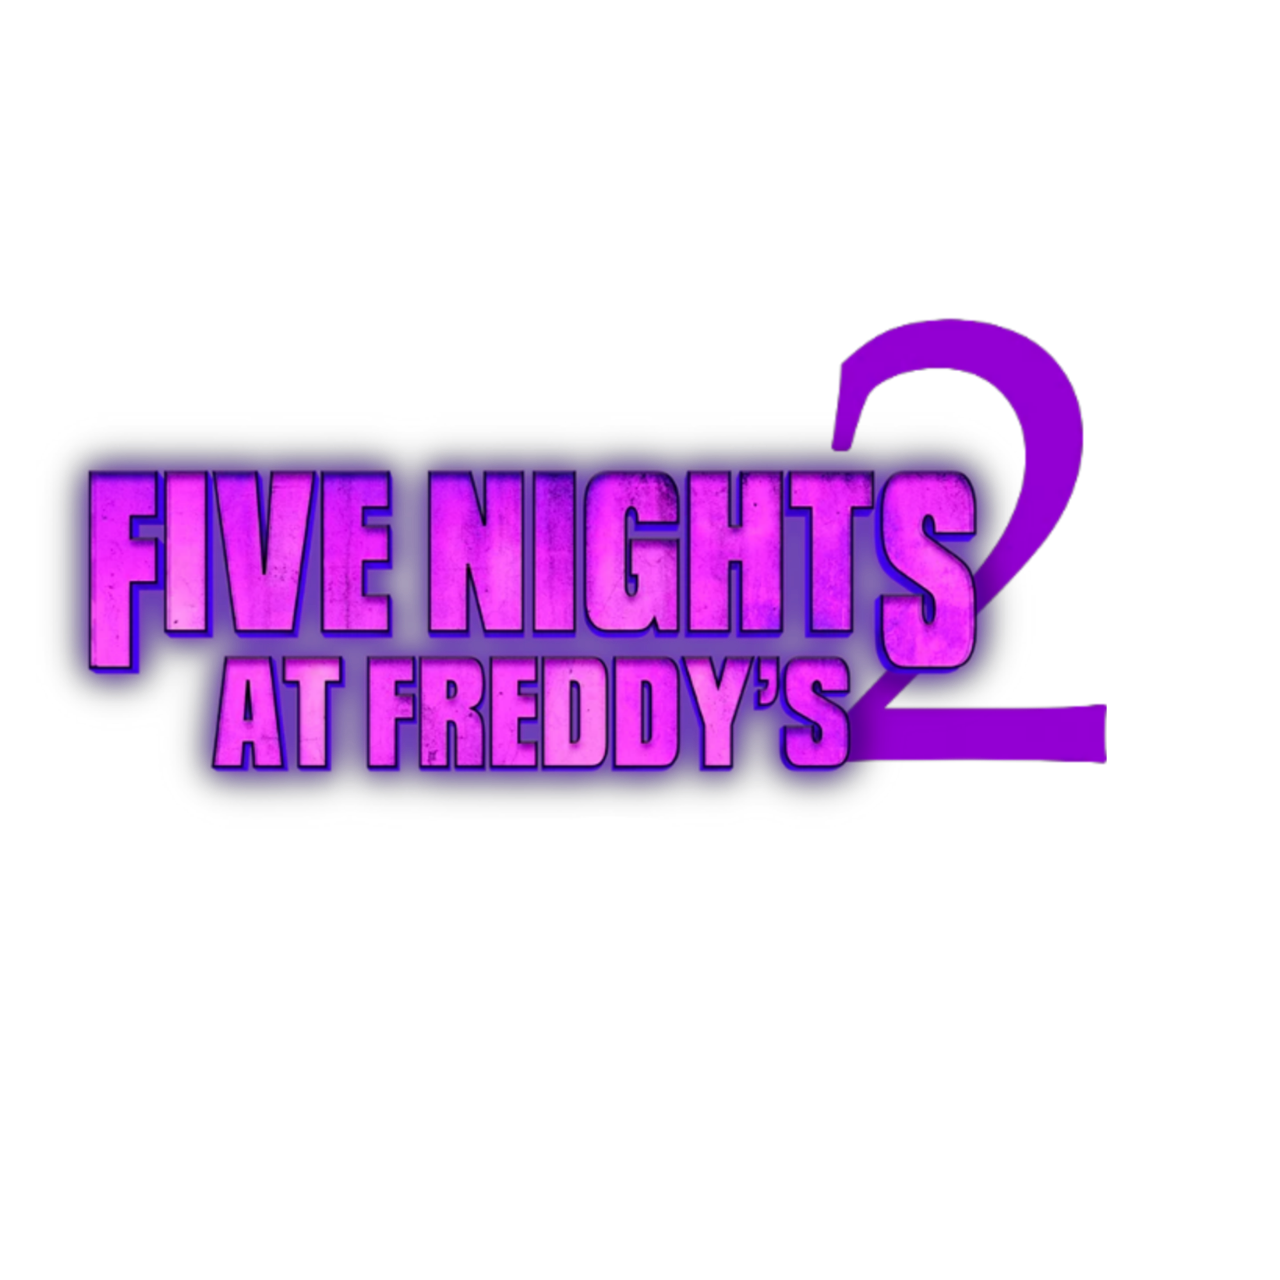 Five Nights at Freddy's 2 (2025), FNAF MOVIE 2